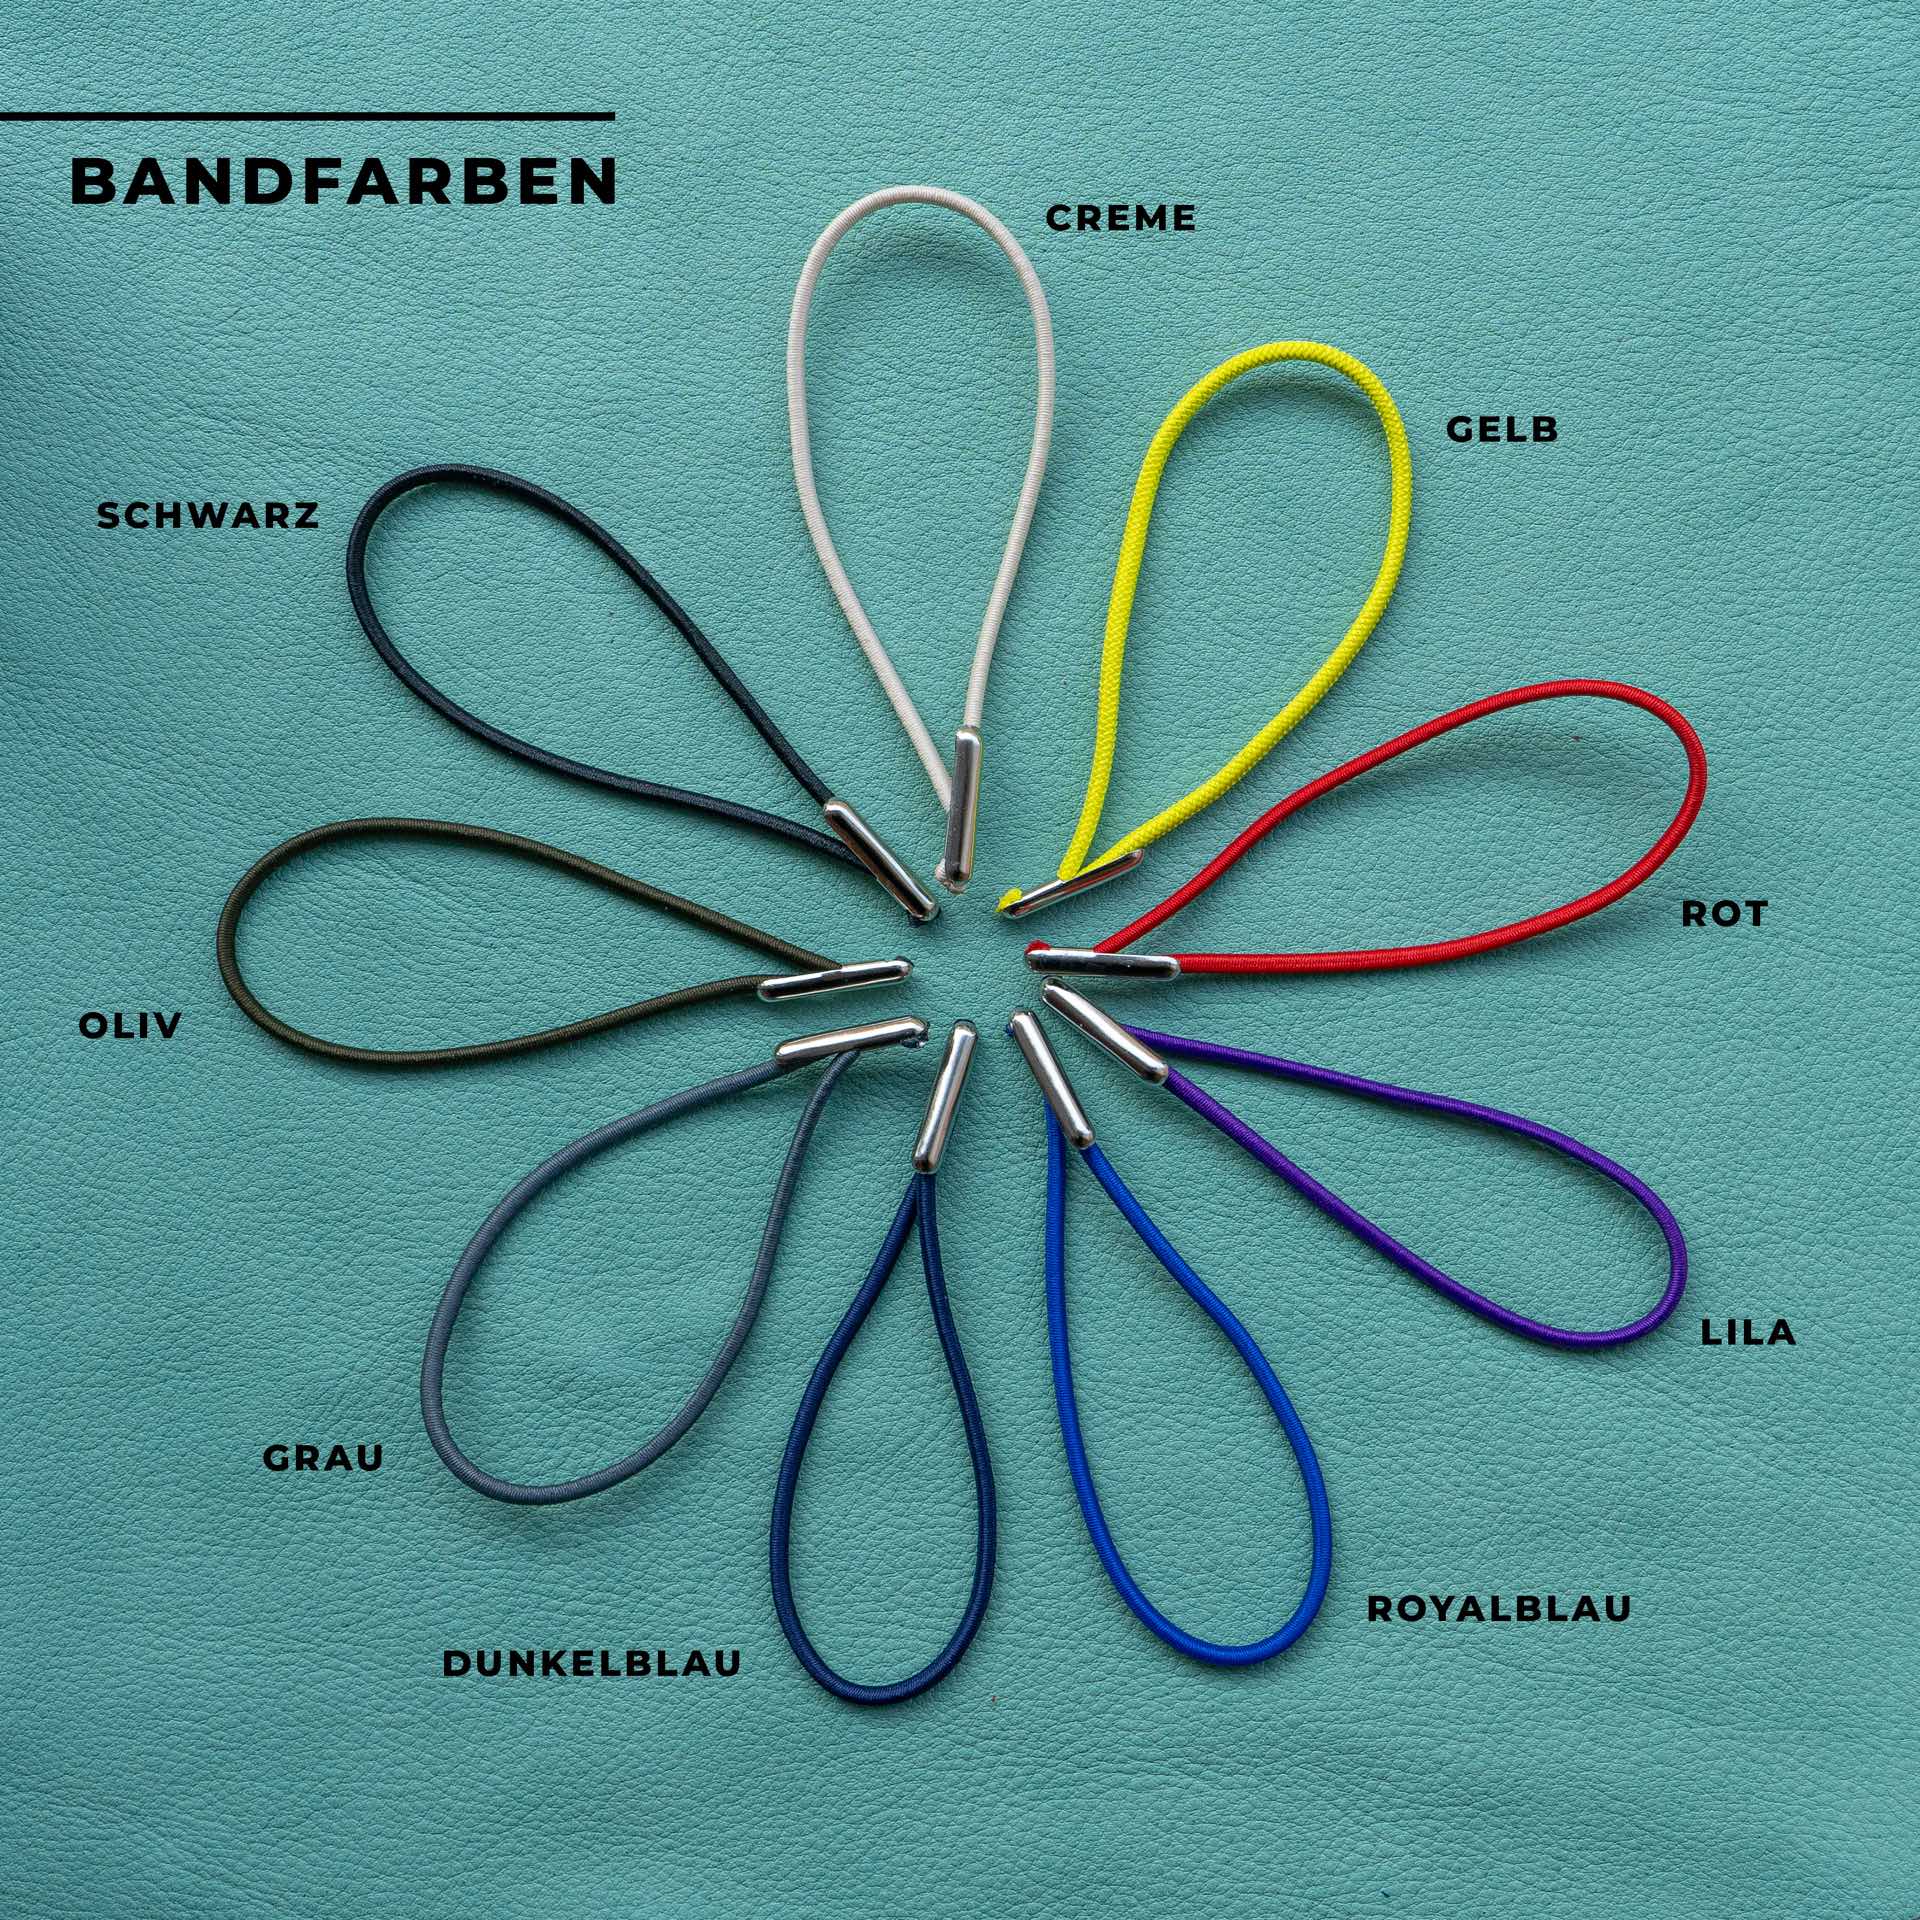 Bandfarben-Franziska-Klee-mint-bandfarben